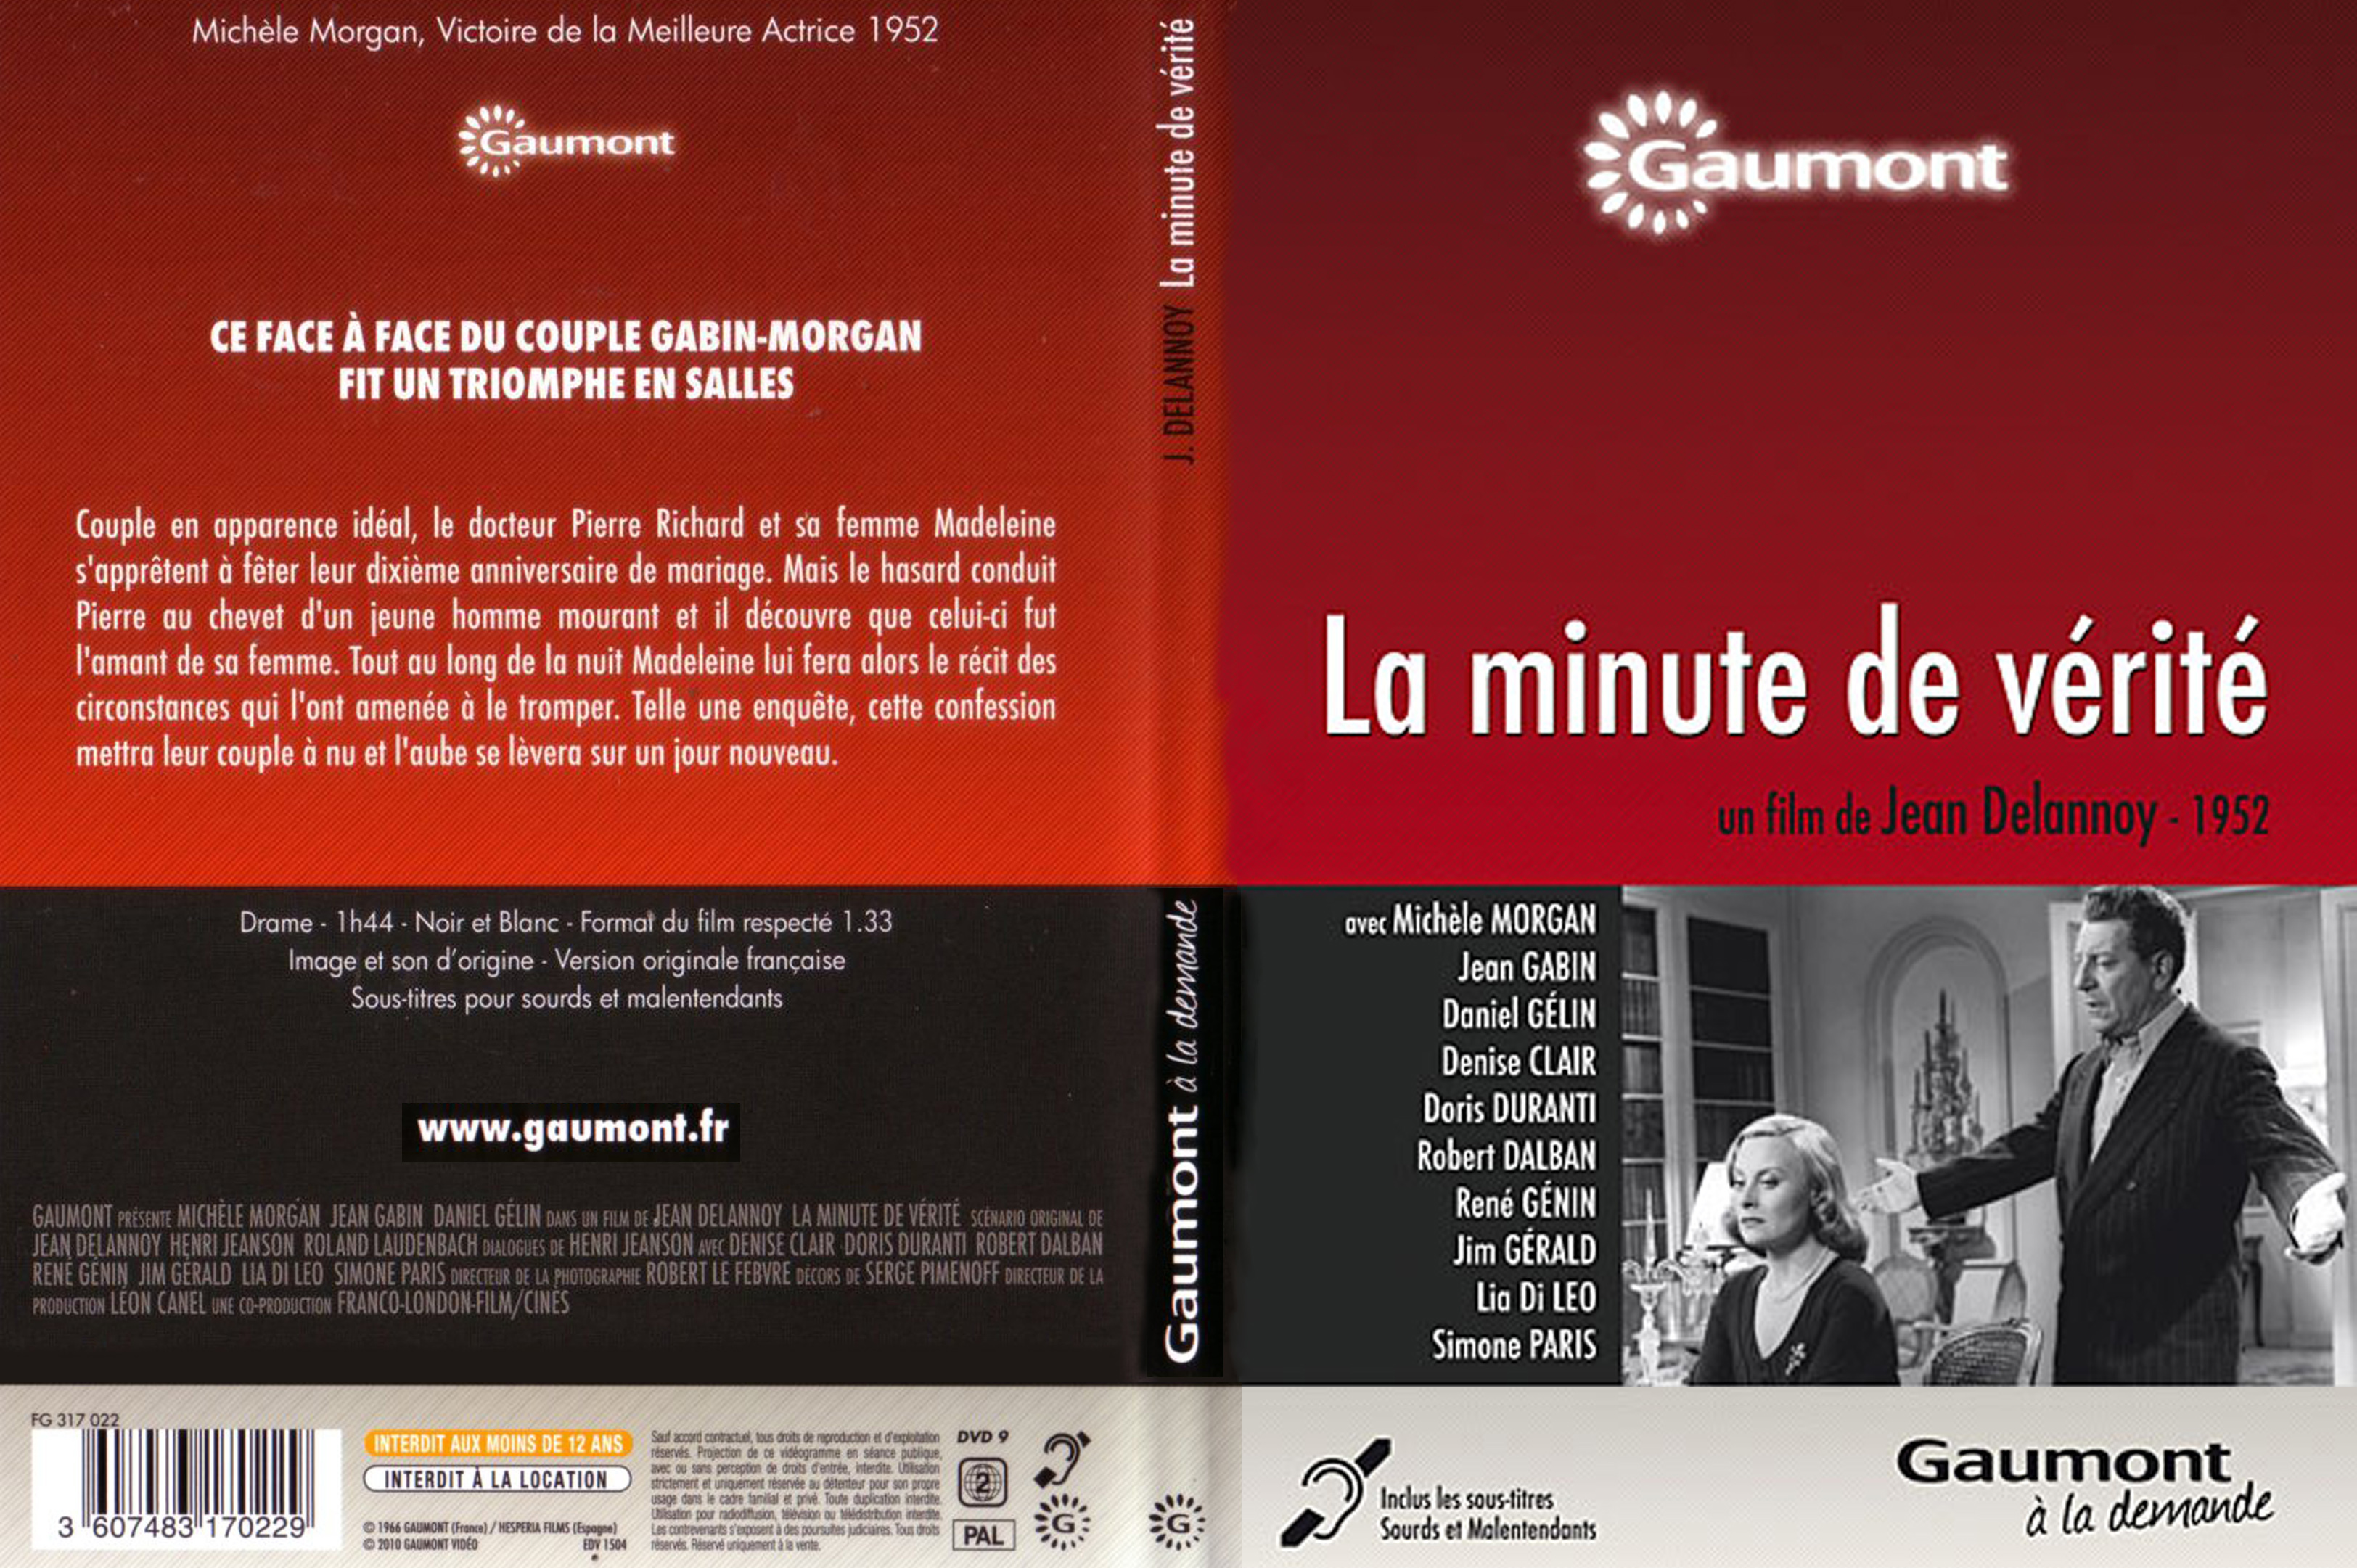 Jaquette DVD La Minute de vrit custom